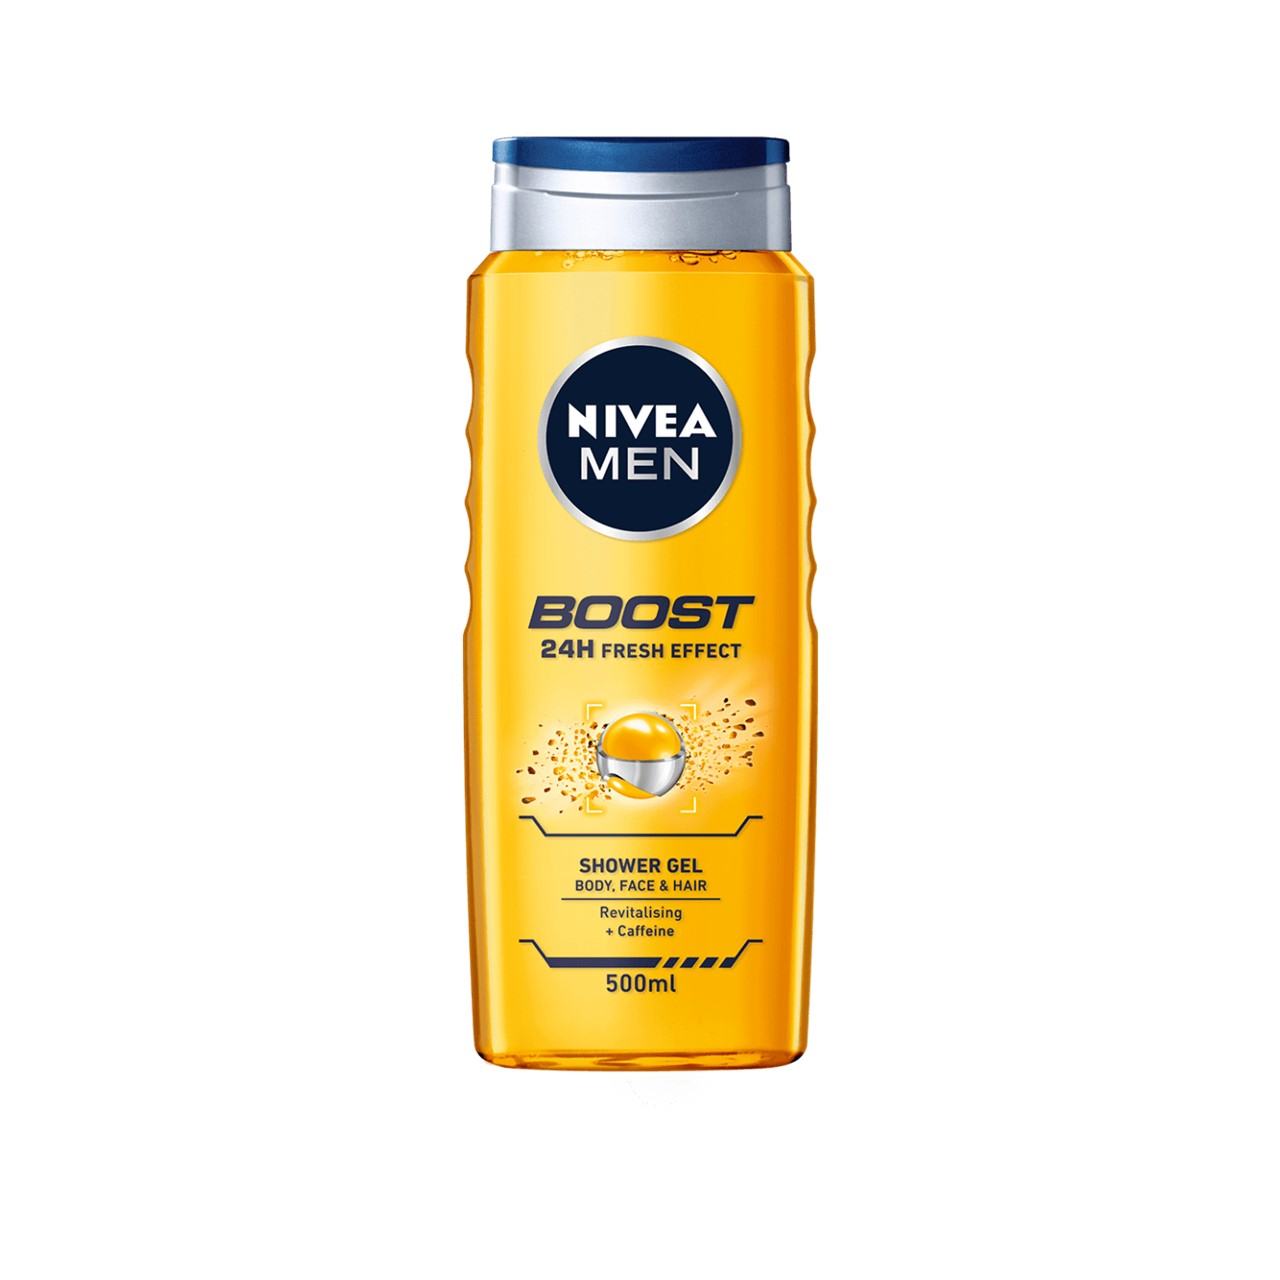 Nivea Men Boost 3 in 1 Shower Gel 500ml (16.91fl oz)